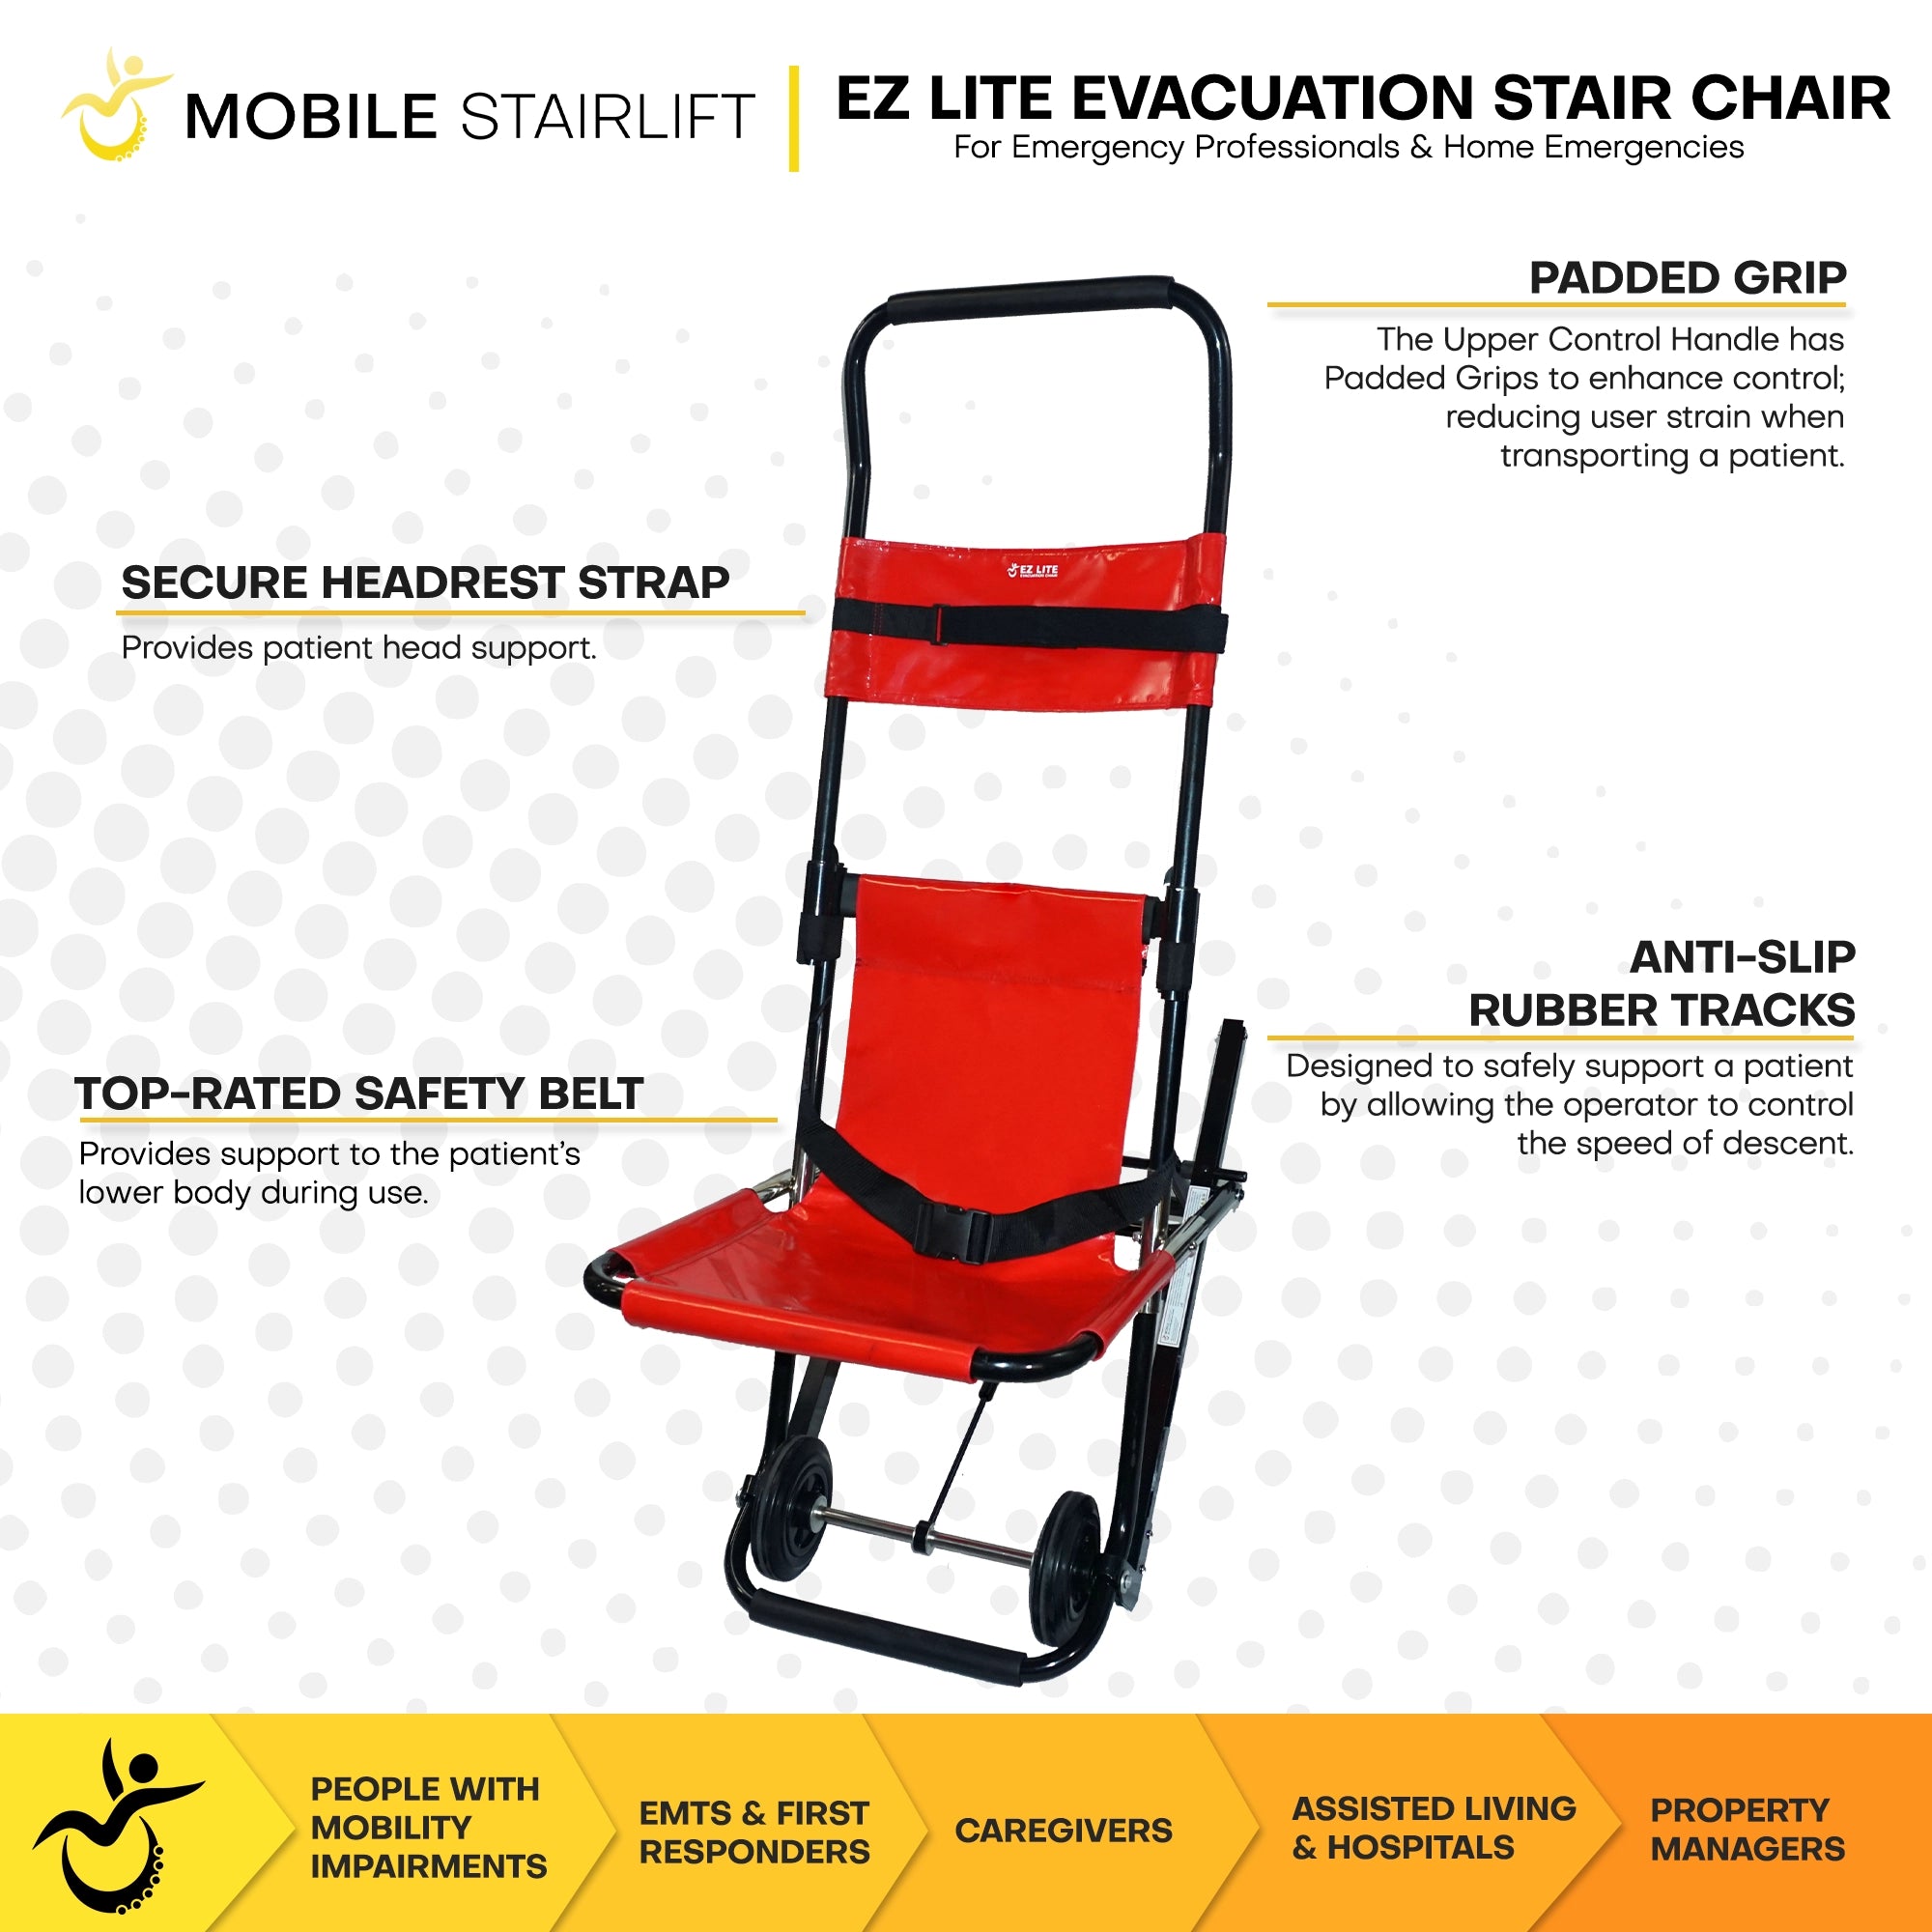 EZ LITE Evacuation Chair